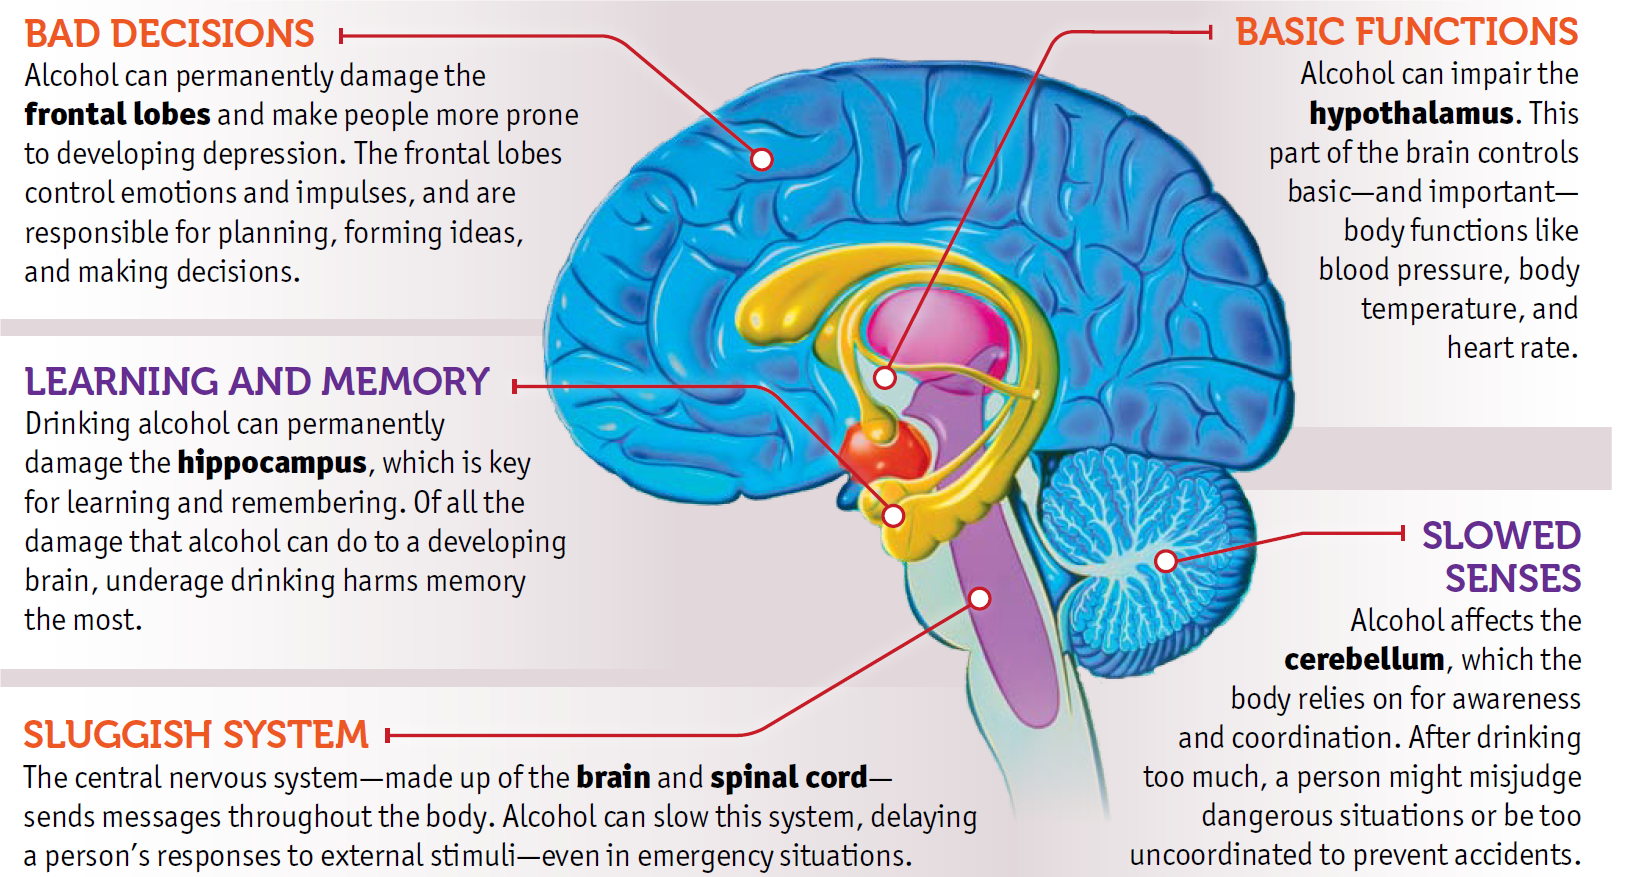 Want brains. Гиппокамп мозга. Brain and nervous System.